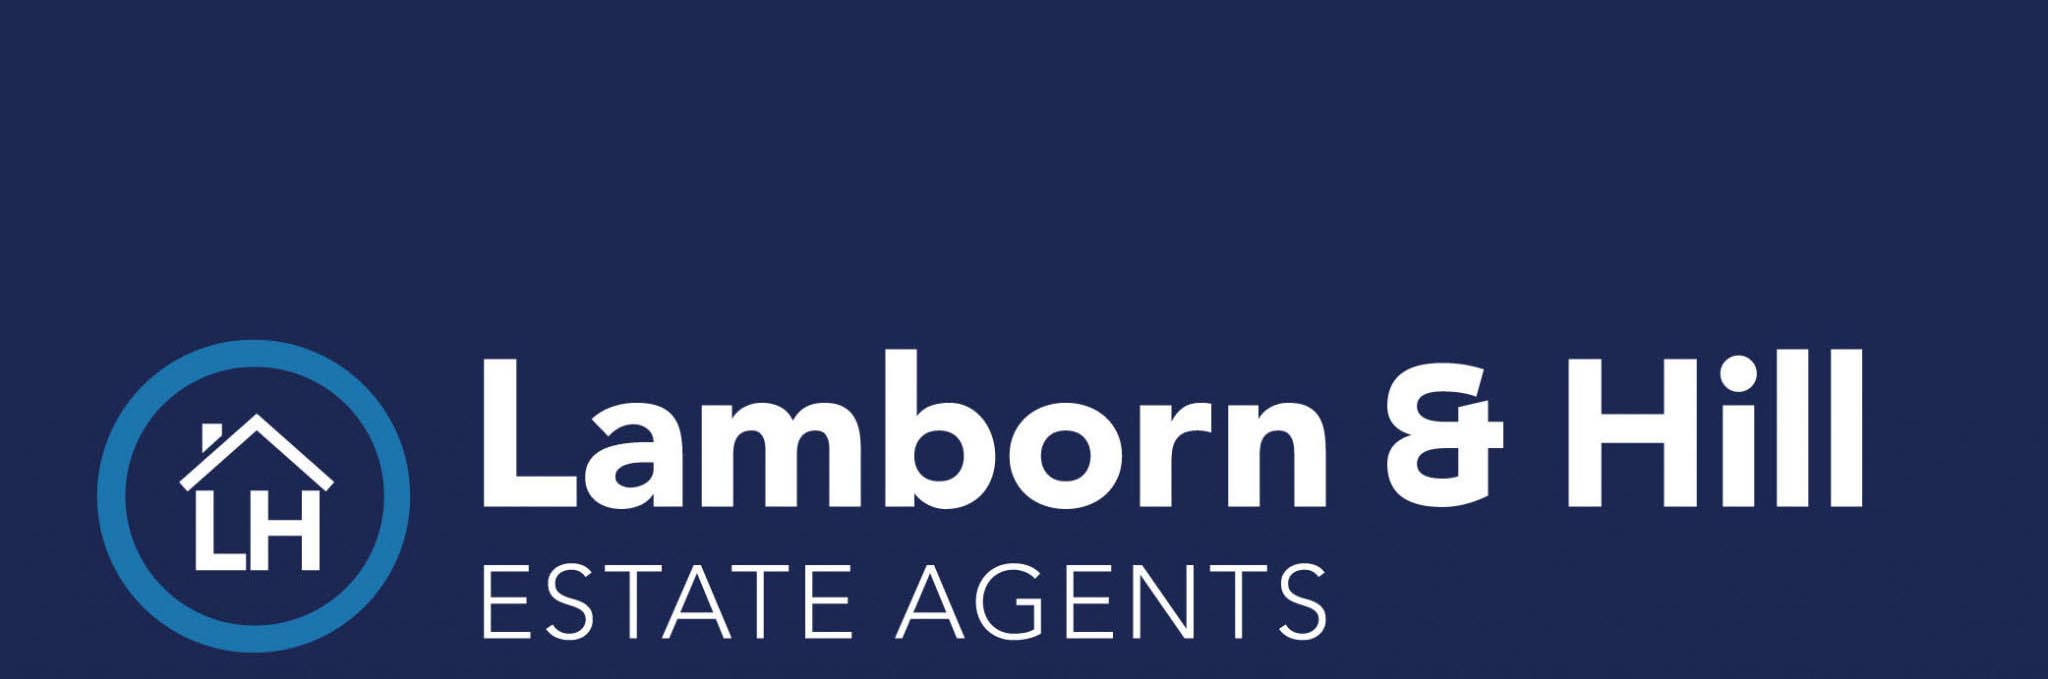 Lamborn & Hill Sittingbourne Estate Agents